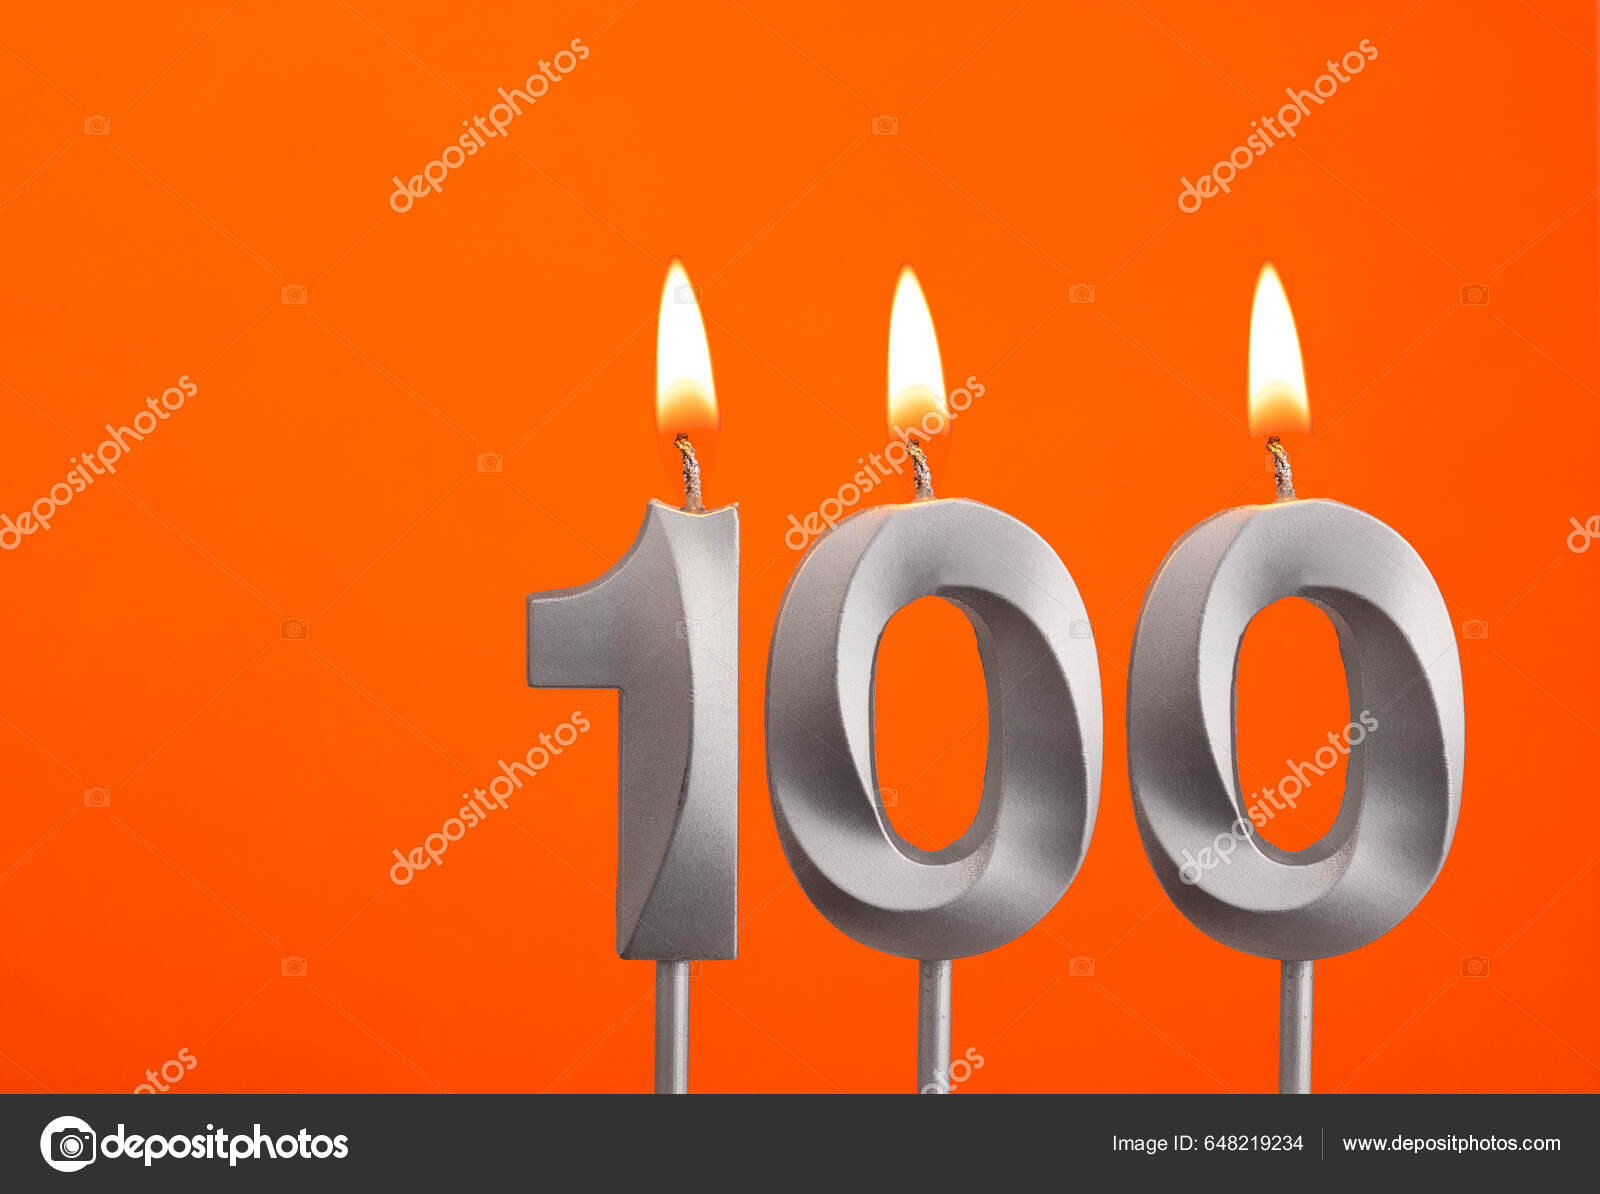 https://st5.depositphotos.com/6922808/64821/i/1600/depositphotos_648219234-stock-photo-candle-number-100-birthday-orange.jpg